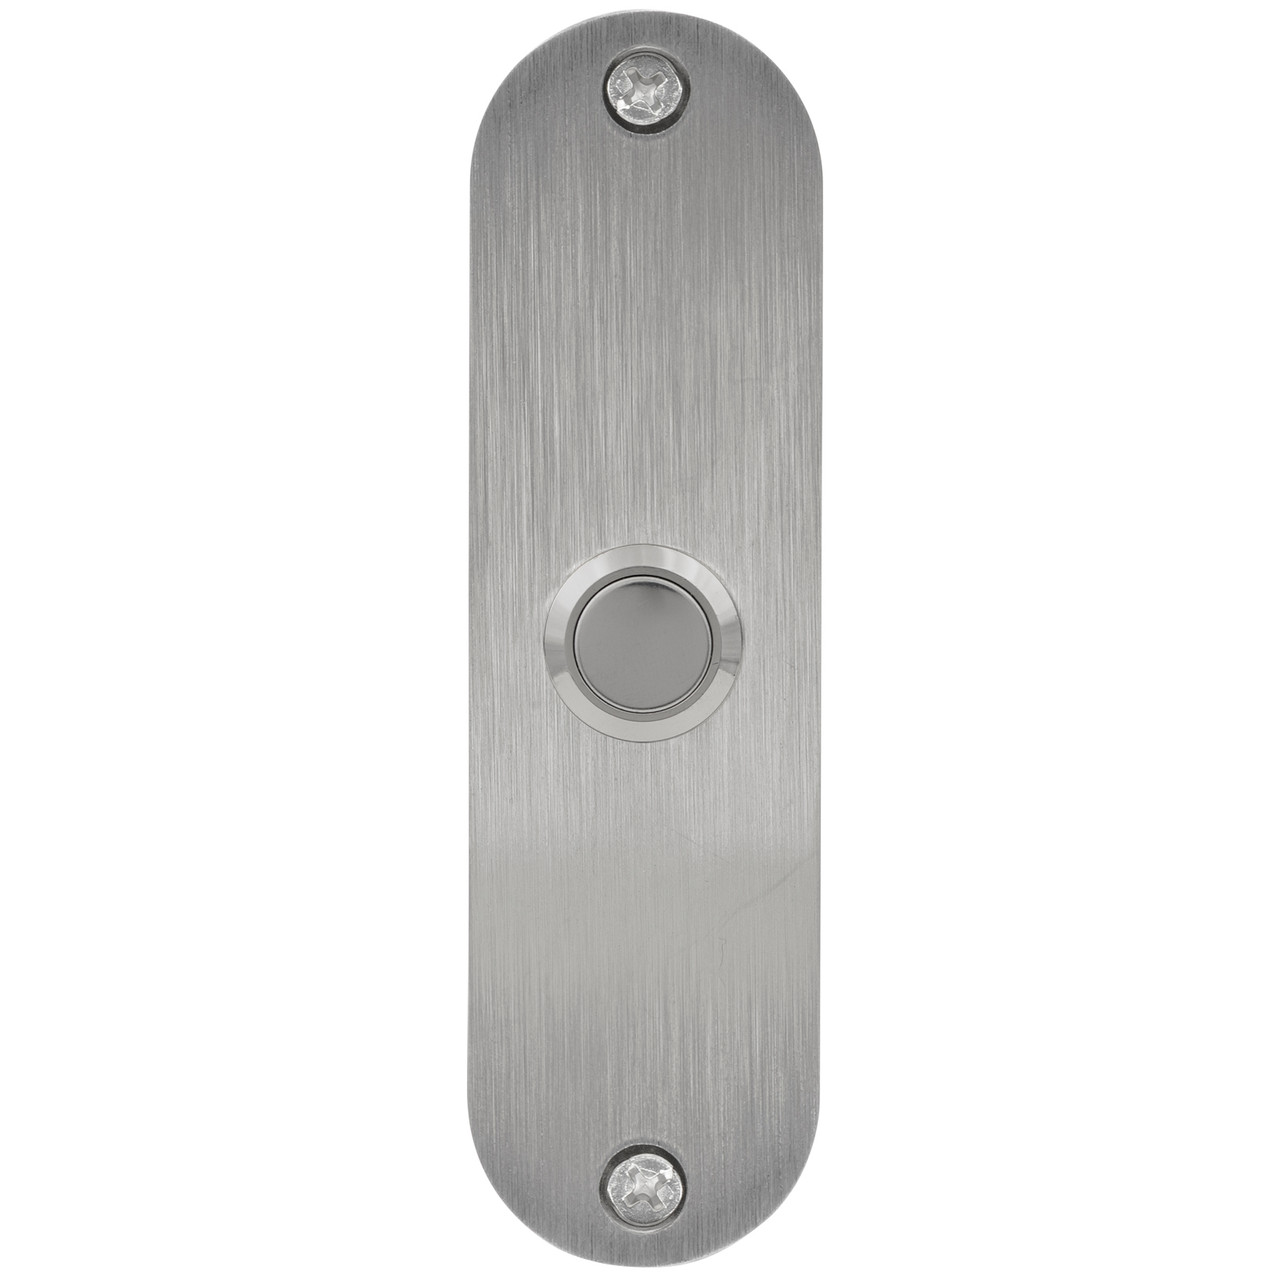 Stainless Steel Modern Oval Doorbell - Waterwood